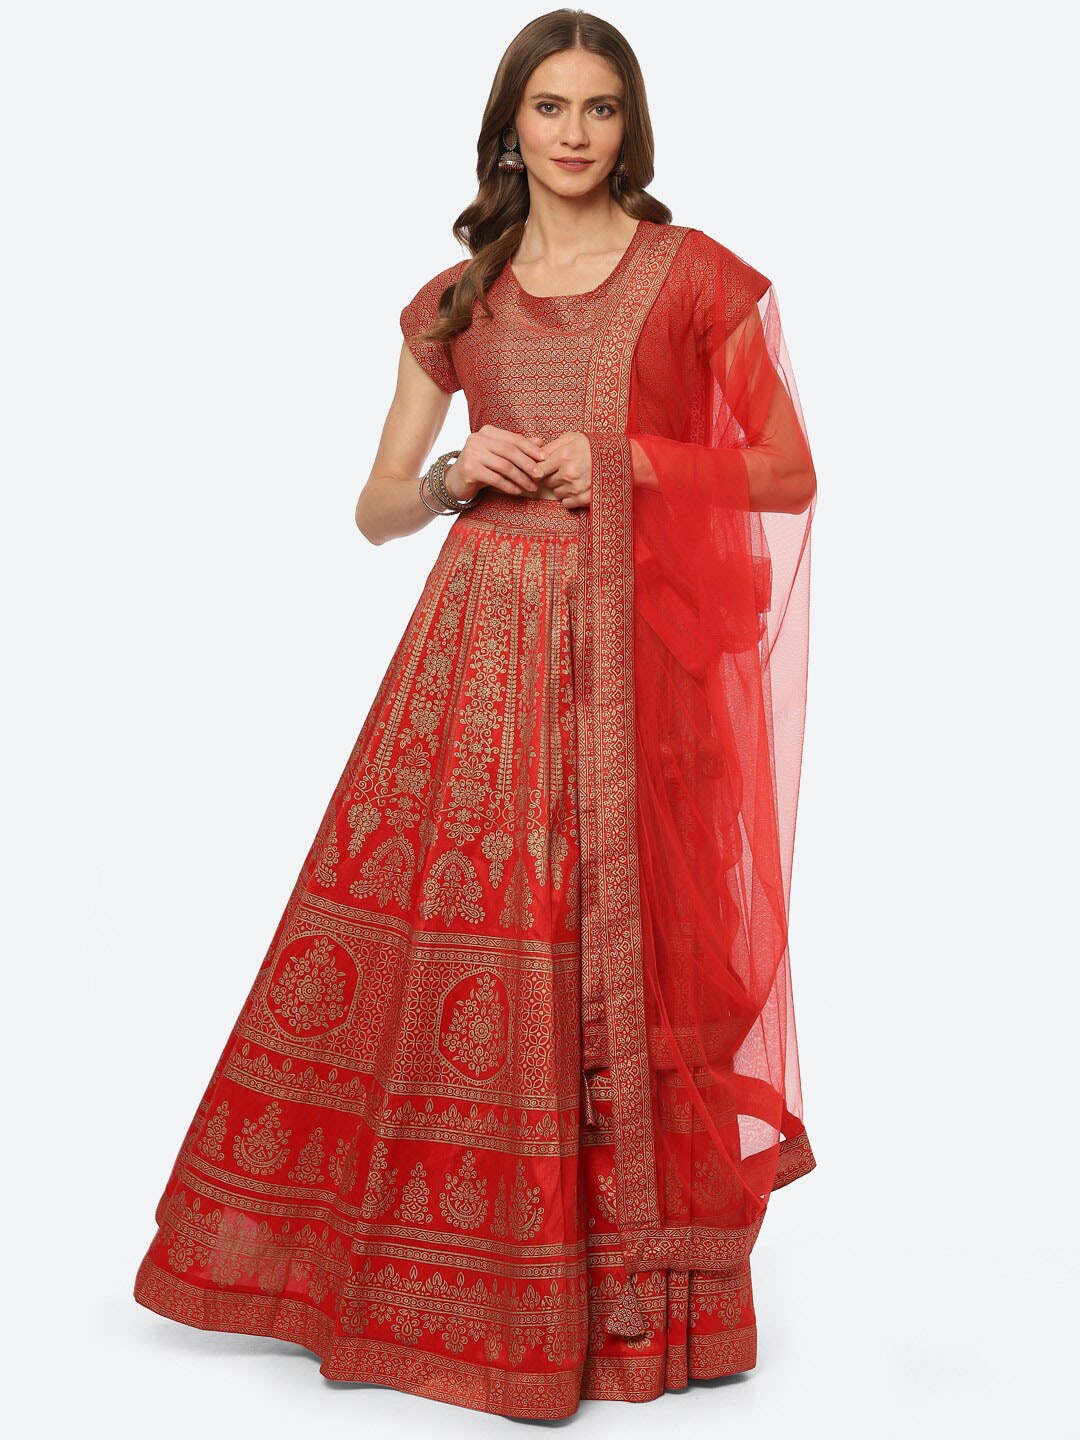 Biba Women Red & Gold-Toned Printed Ready to Wear Lehenga & Choli Price in India